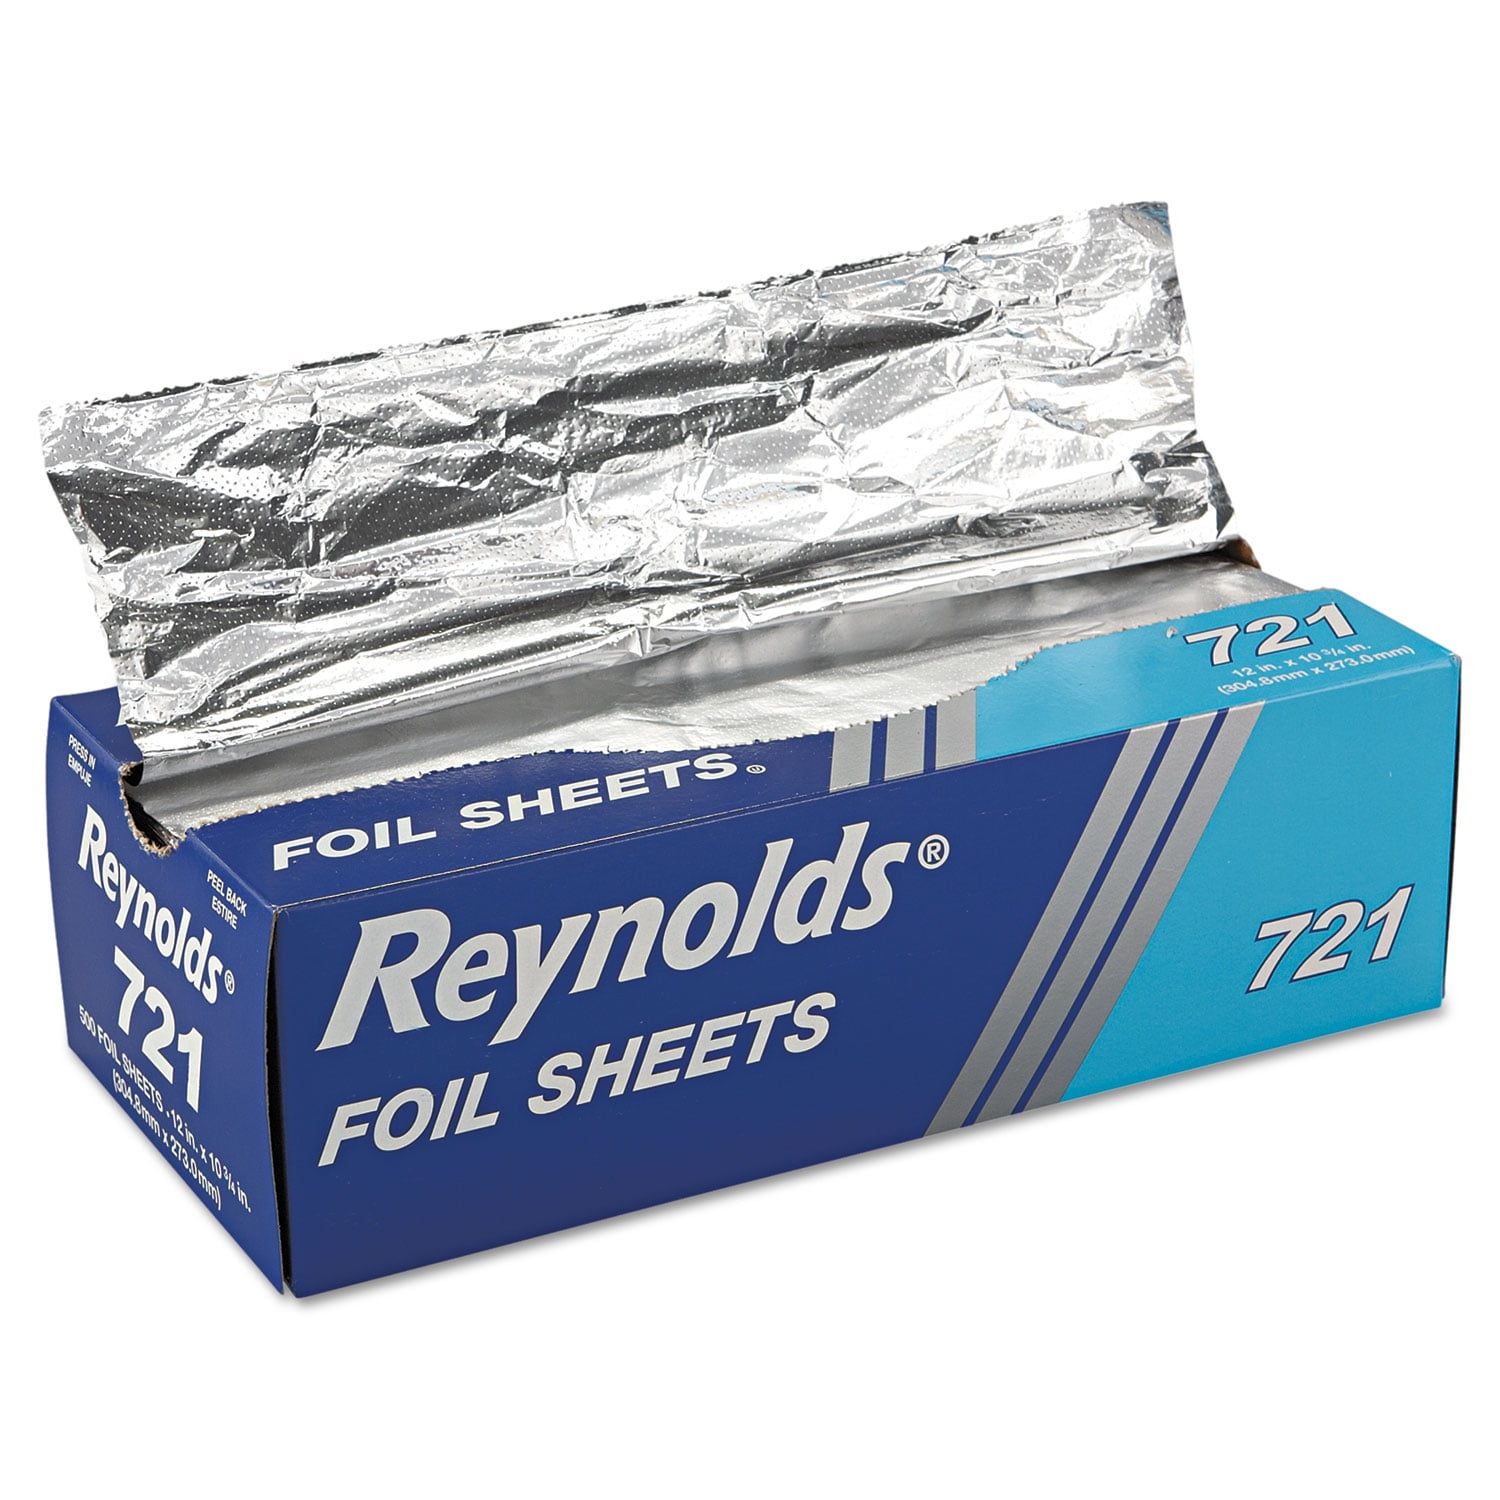 100 Pkg. 18x30 Silver Mylar Sheets - Mid Atlantic Packaging